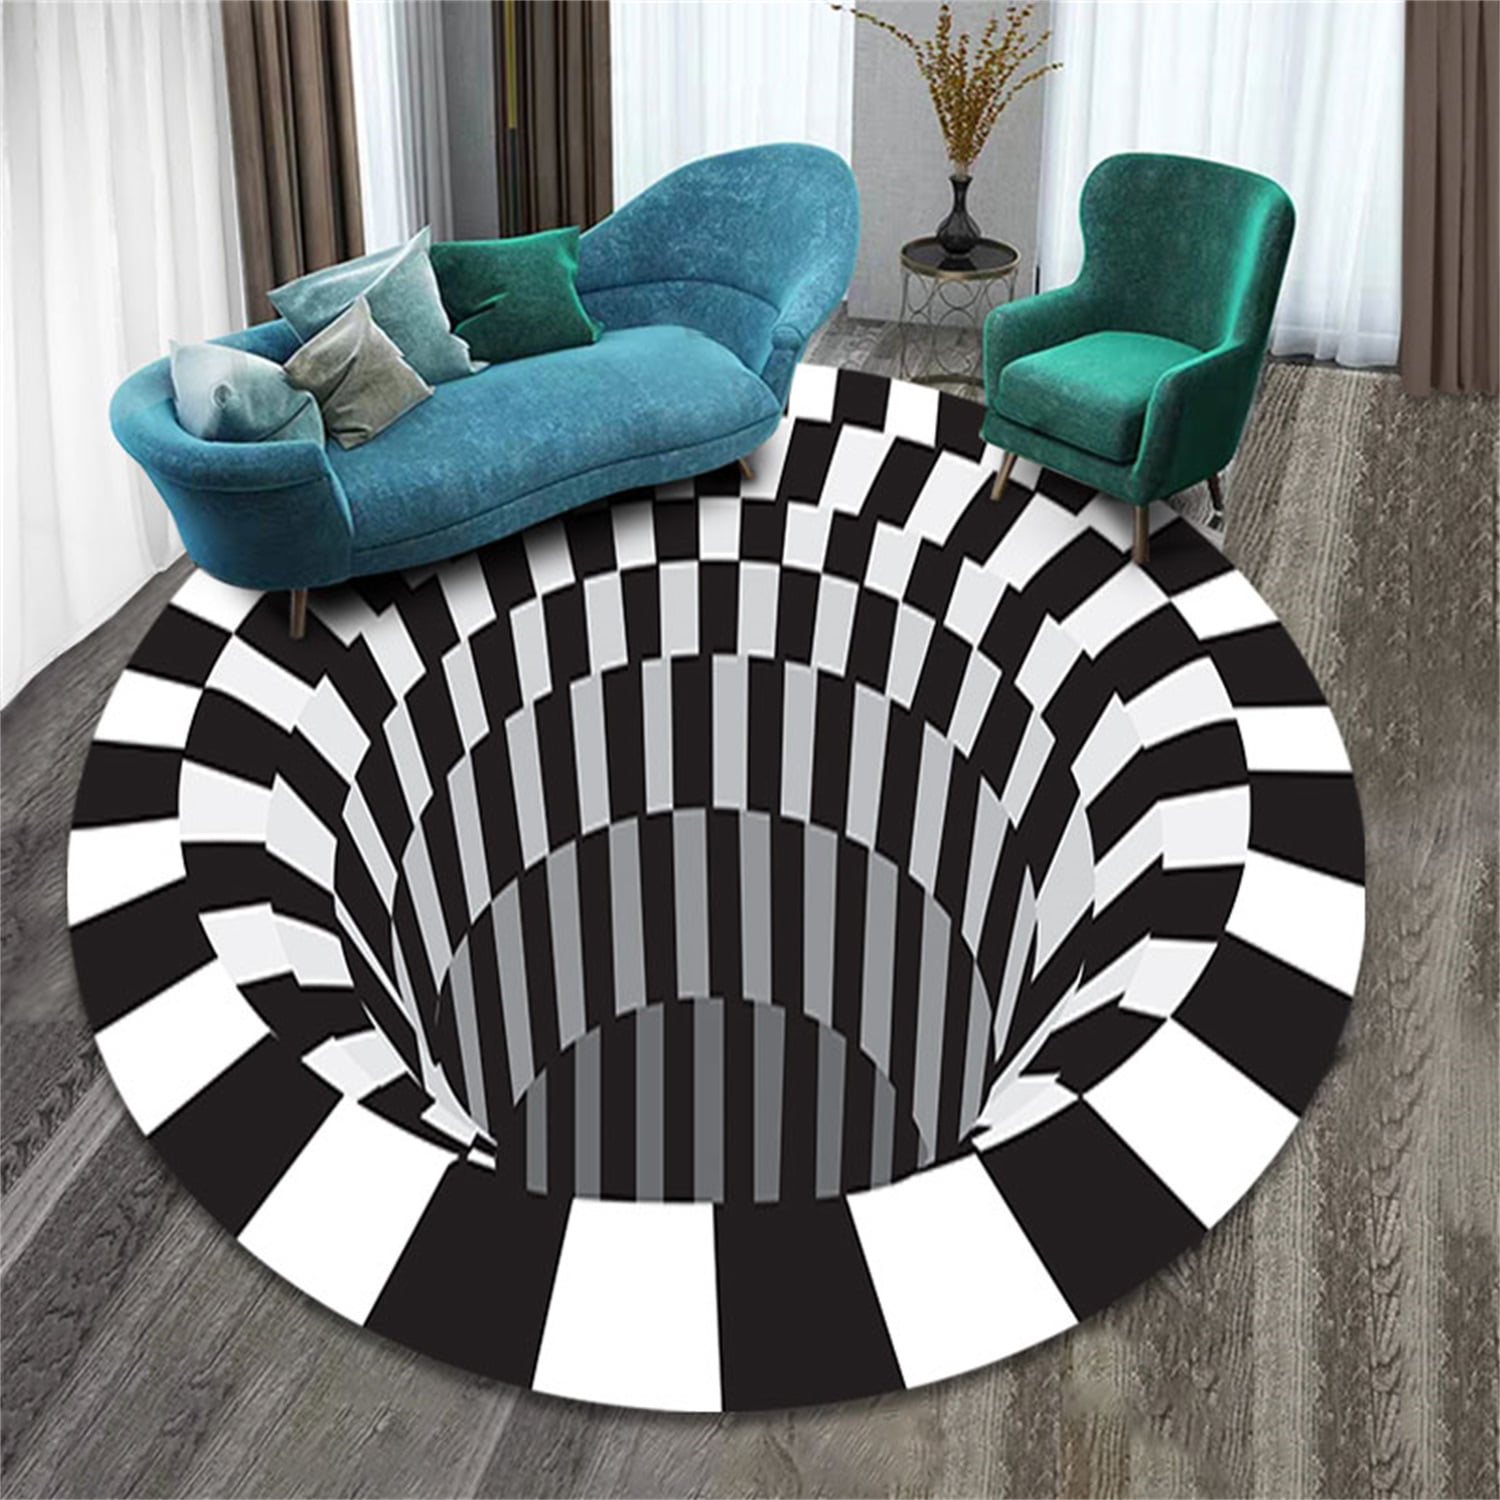 3D Cat Anti-slip Doormat Rug Carpet For Living Room Floor Mat Home Decor black 